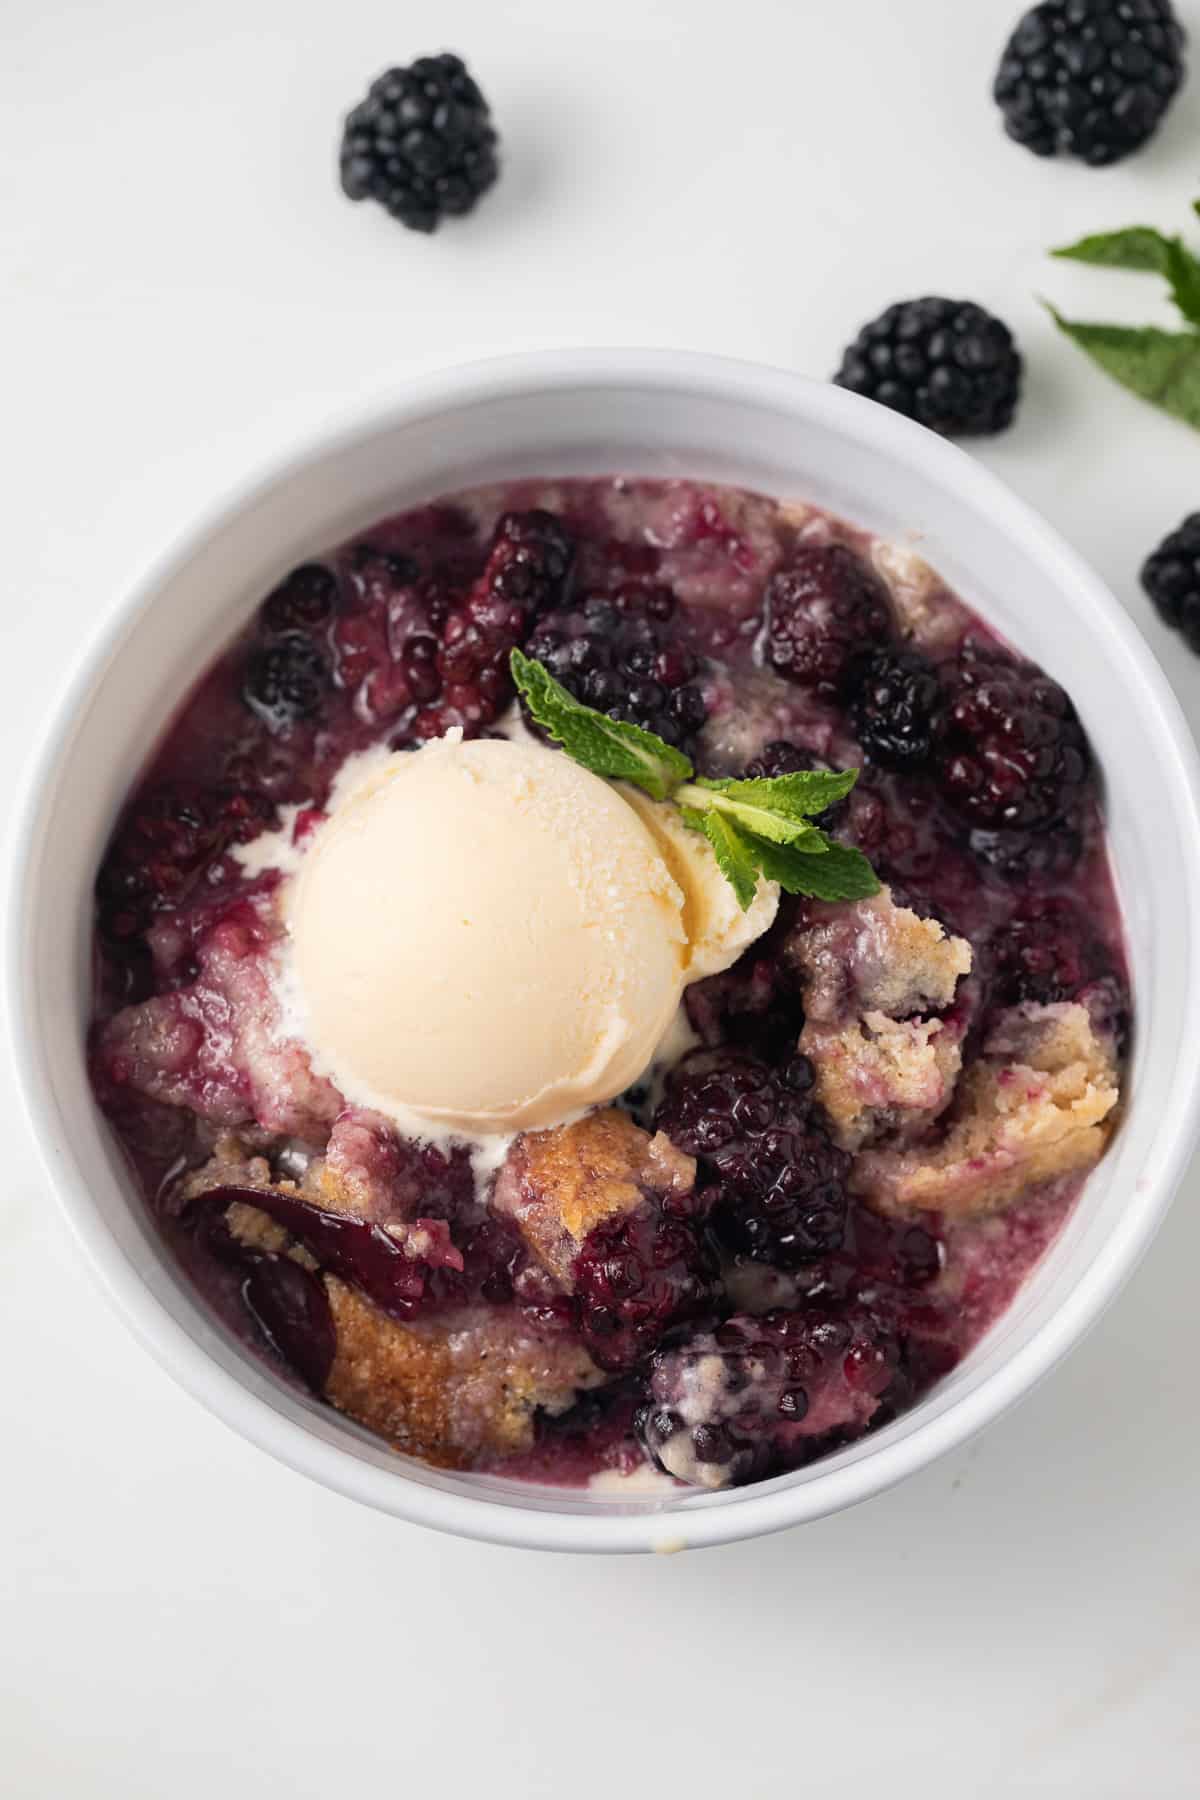 Blackberry cobbler in white bowl with scoop of vanilla ice cream.